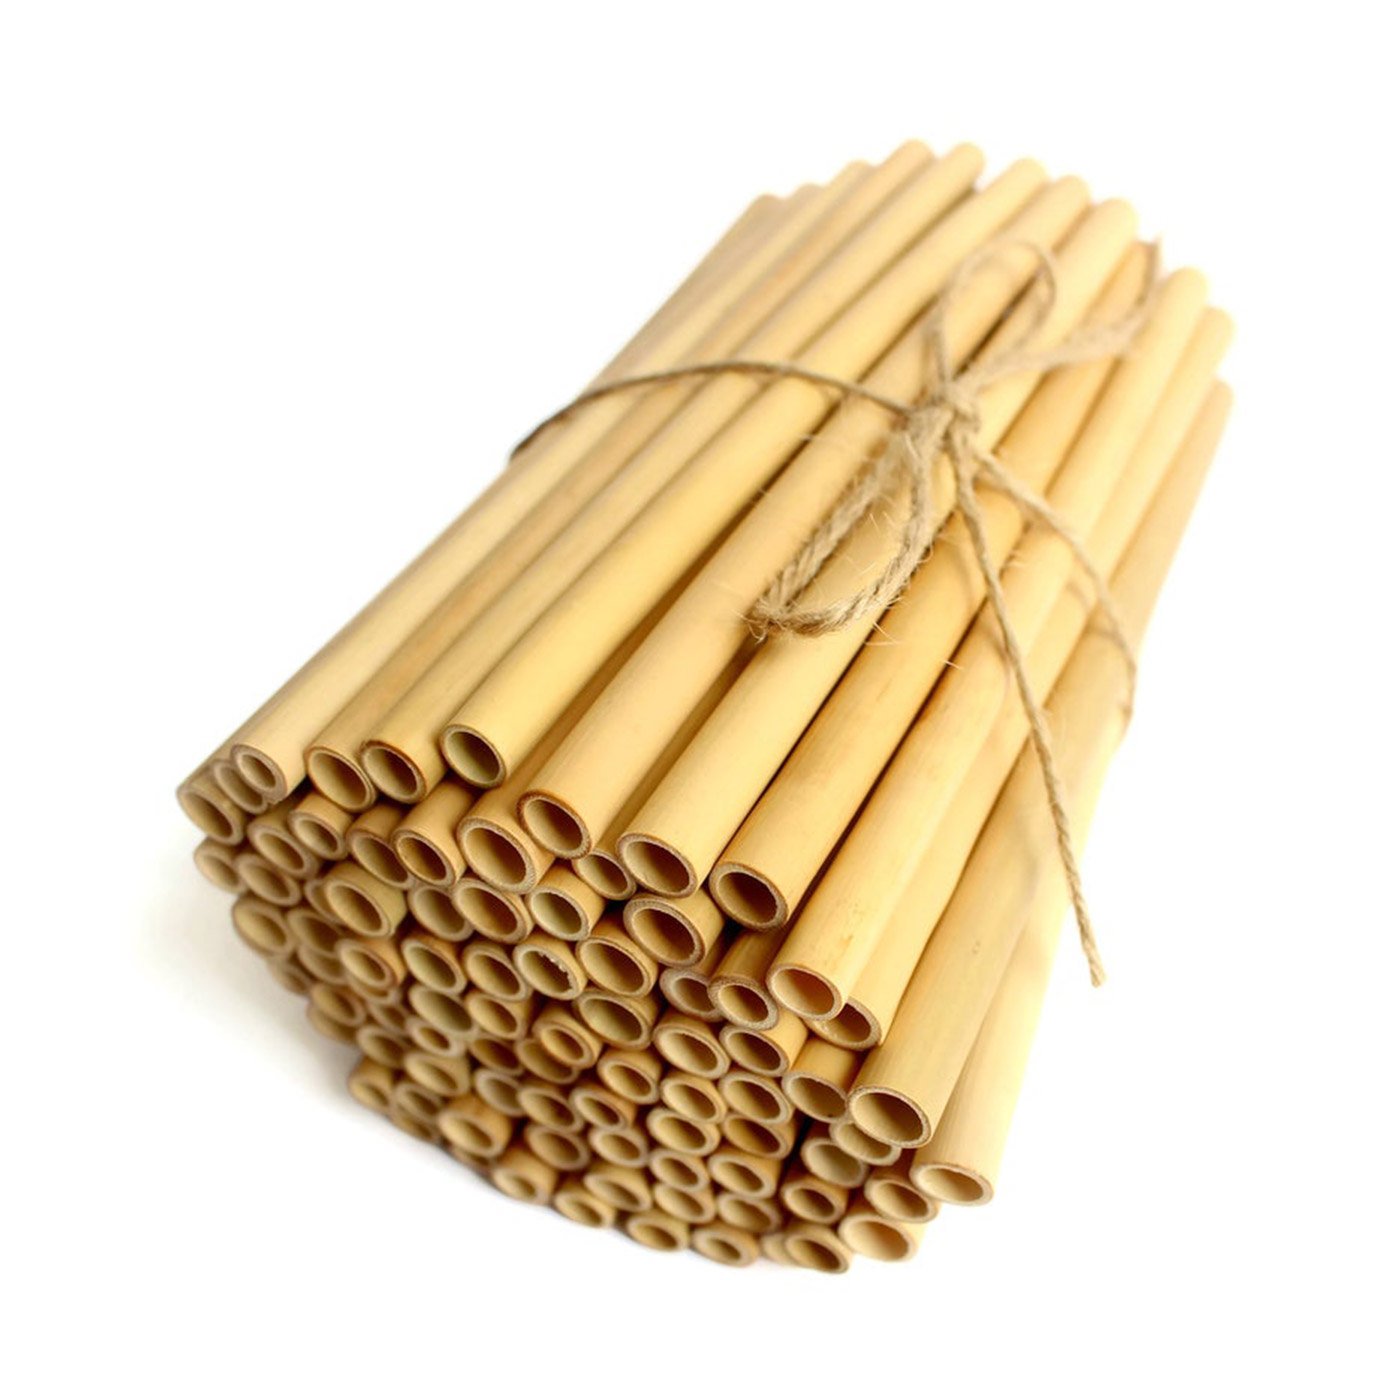 Bamboo Straws - Organic Straw